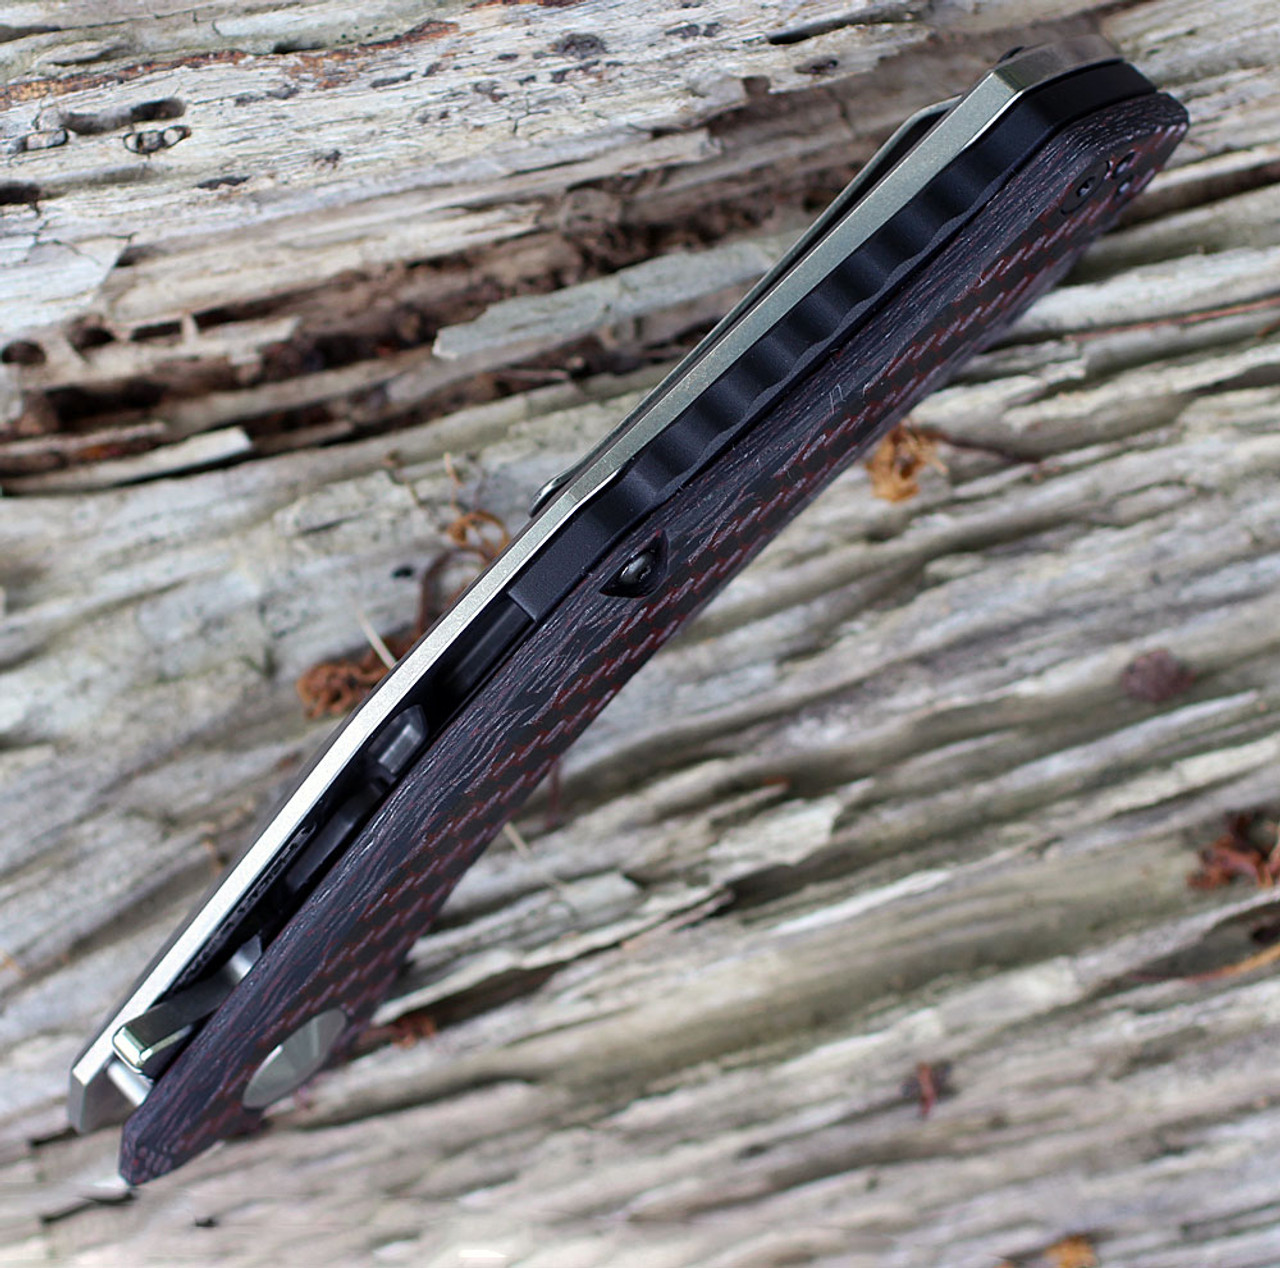 Zero Tolerance 0462 Sinkevich Flipper Knife, 3.75 in CPM-20CV Plain Blade, Carbon Fiber Handle